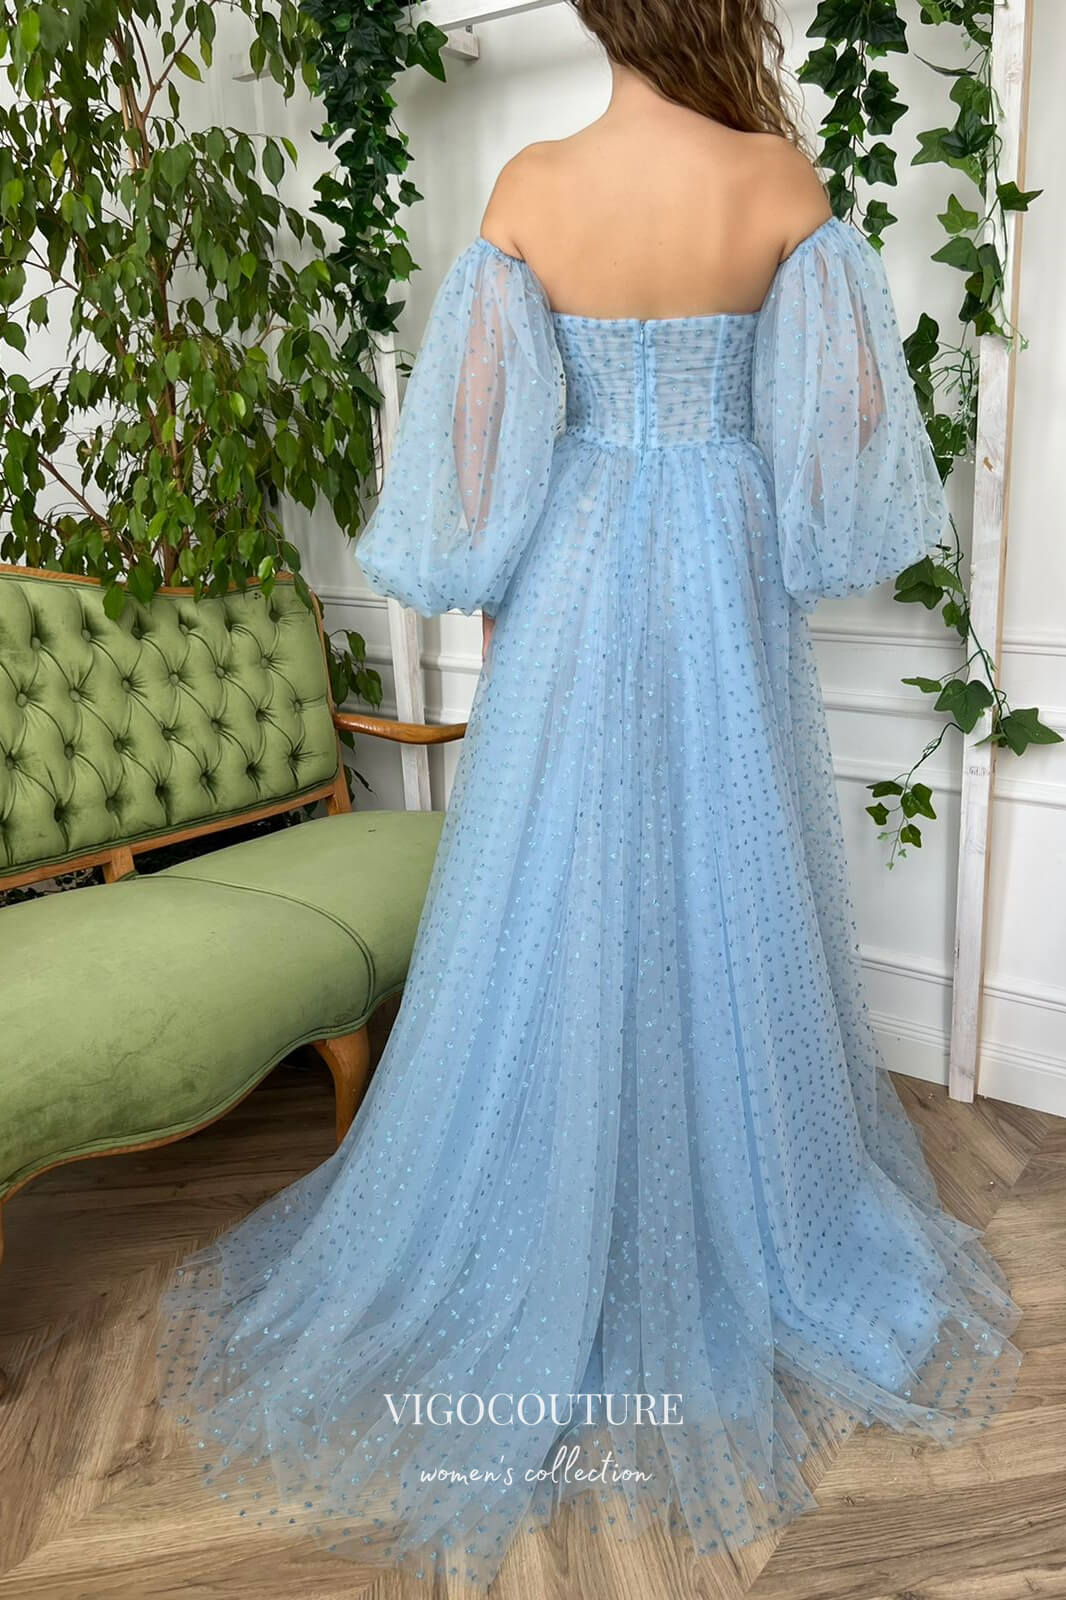 vigocouture-Printed Hearts Prom Dresses Long Puffy Sleeves Formal Dresses 21578-Prom Dresses-vigocouture-